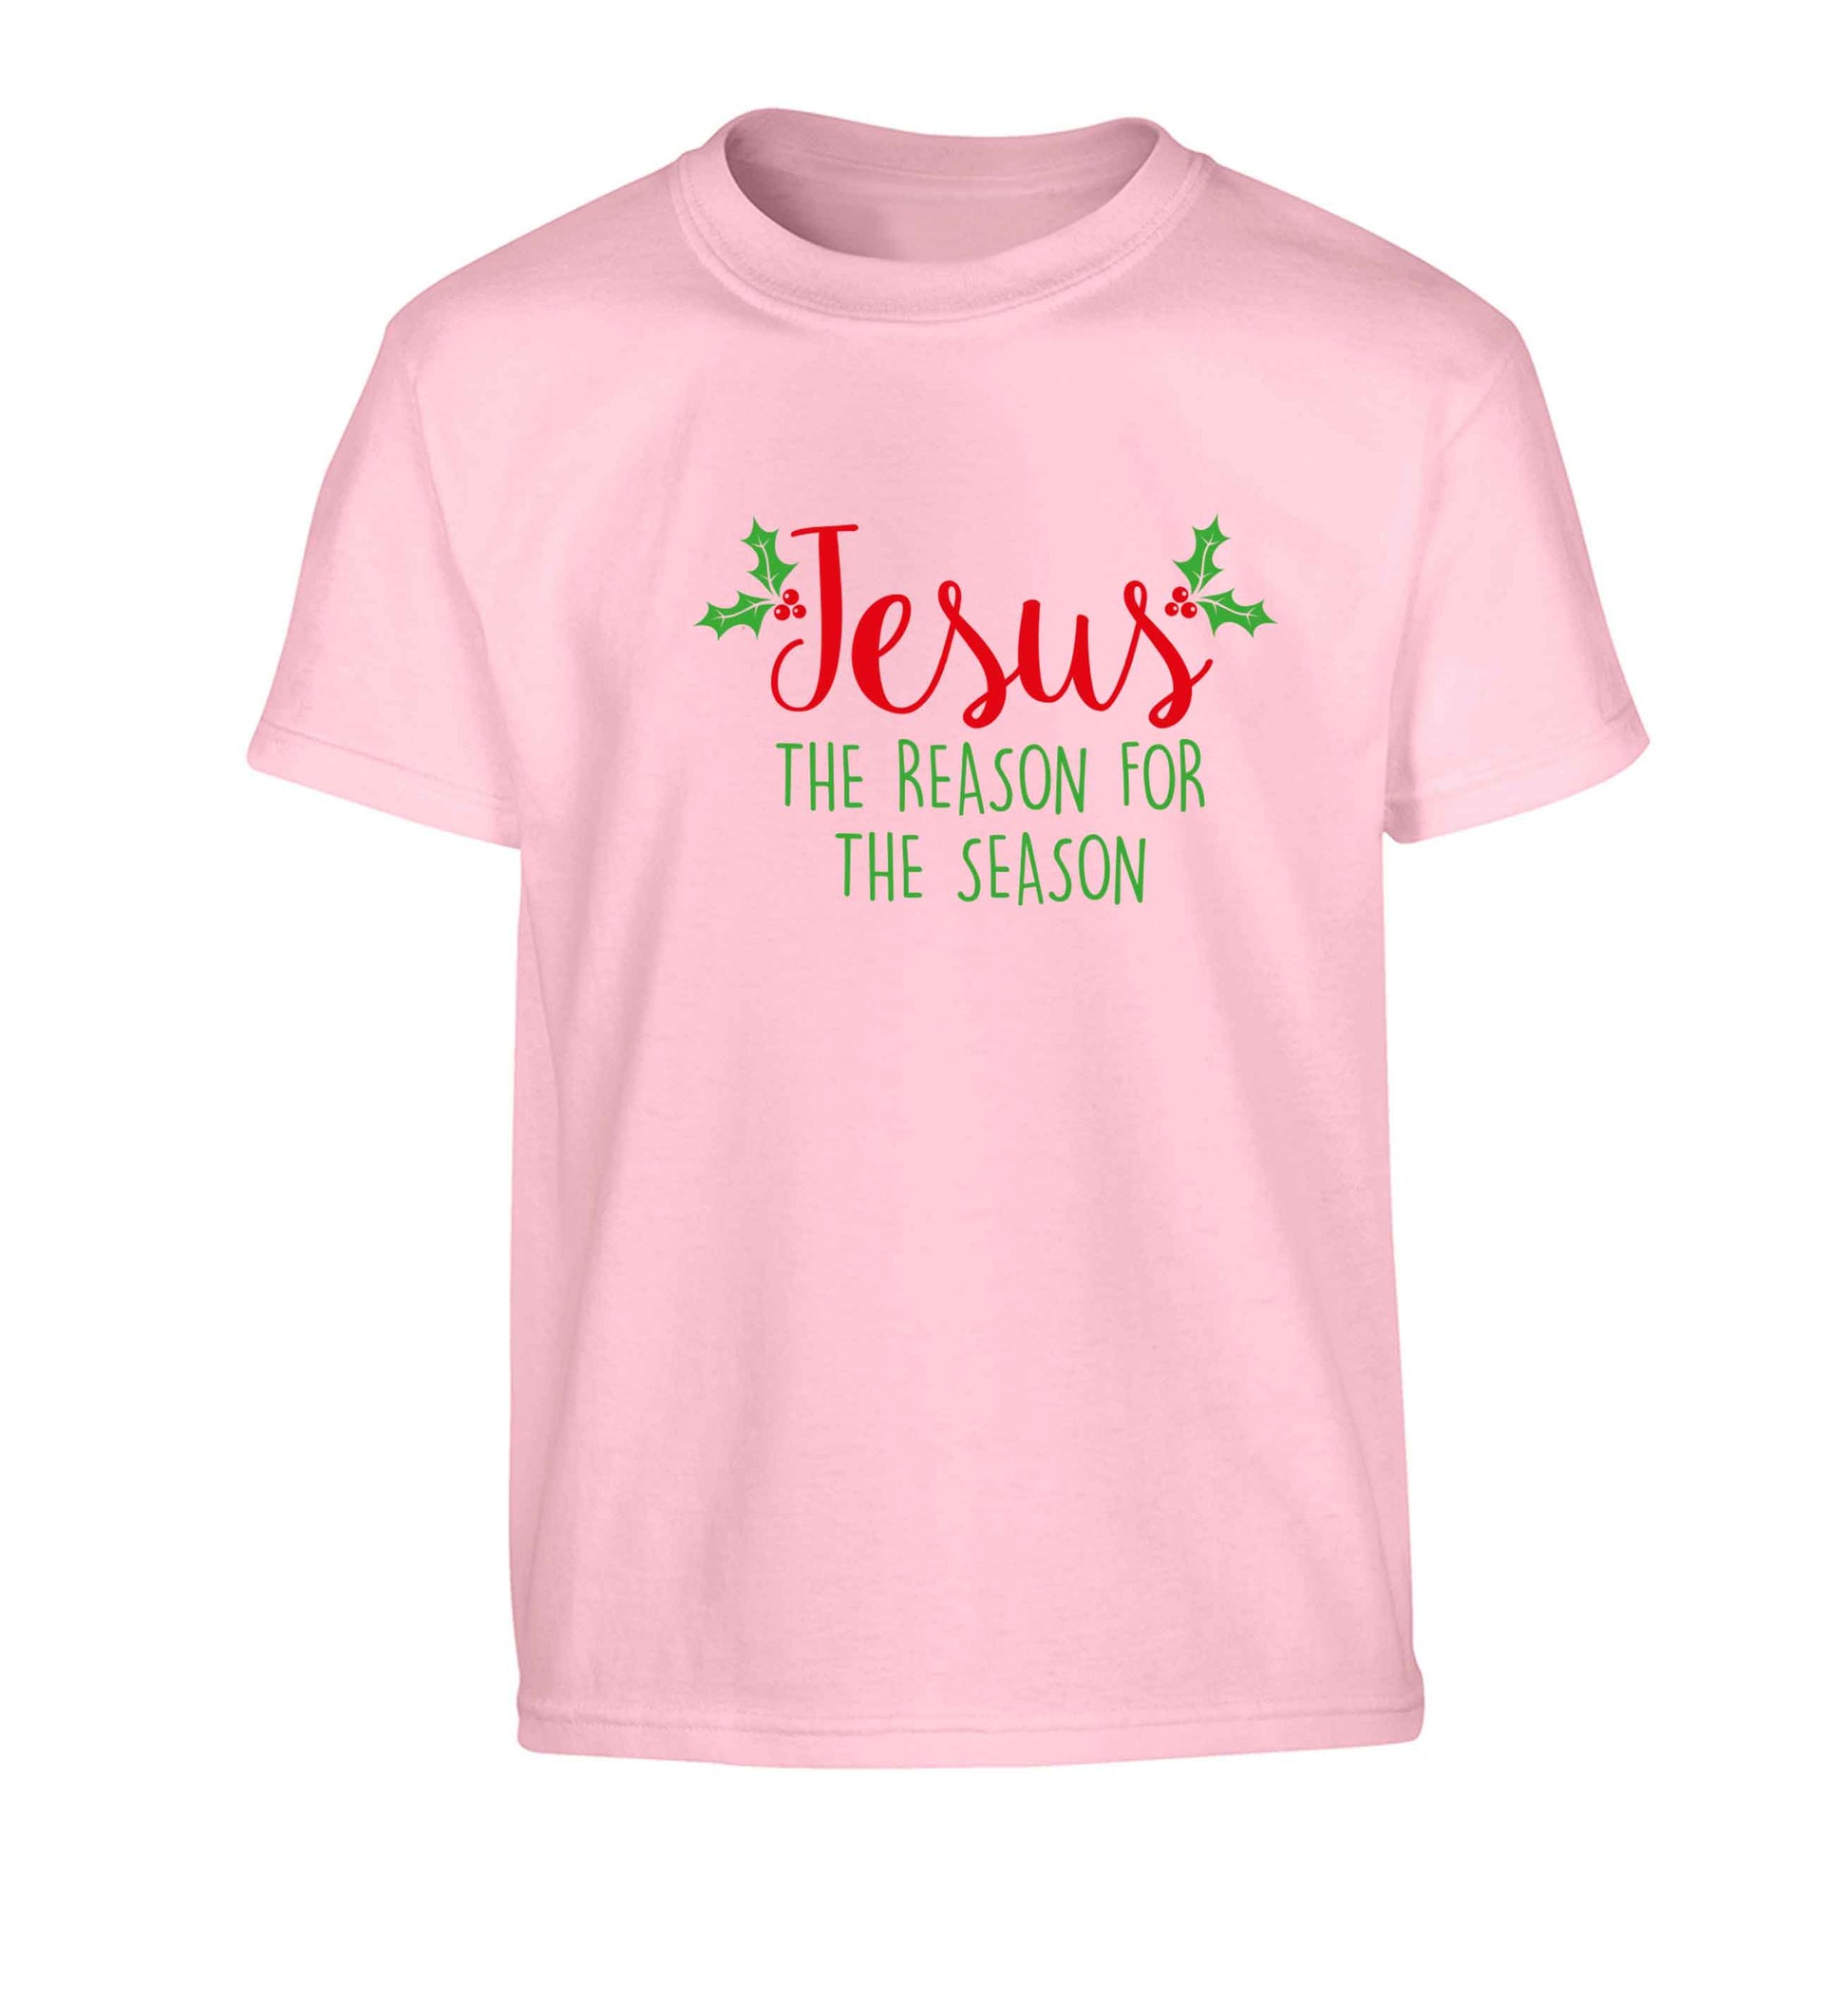 Jesus the reason for the season Children's light pink Tshirt 12-13 Years